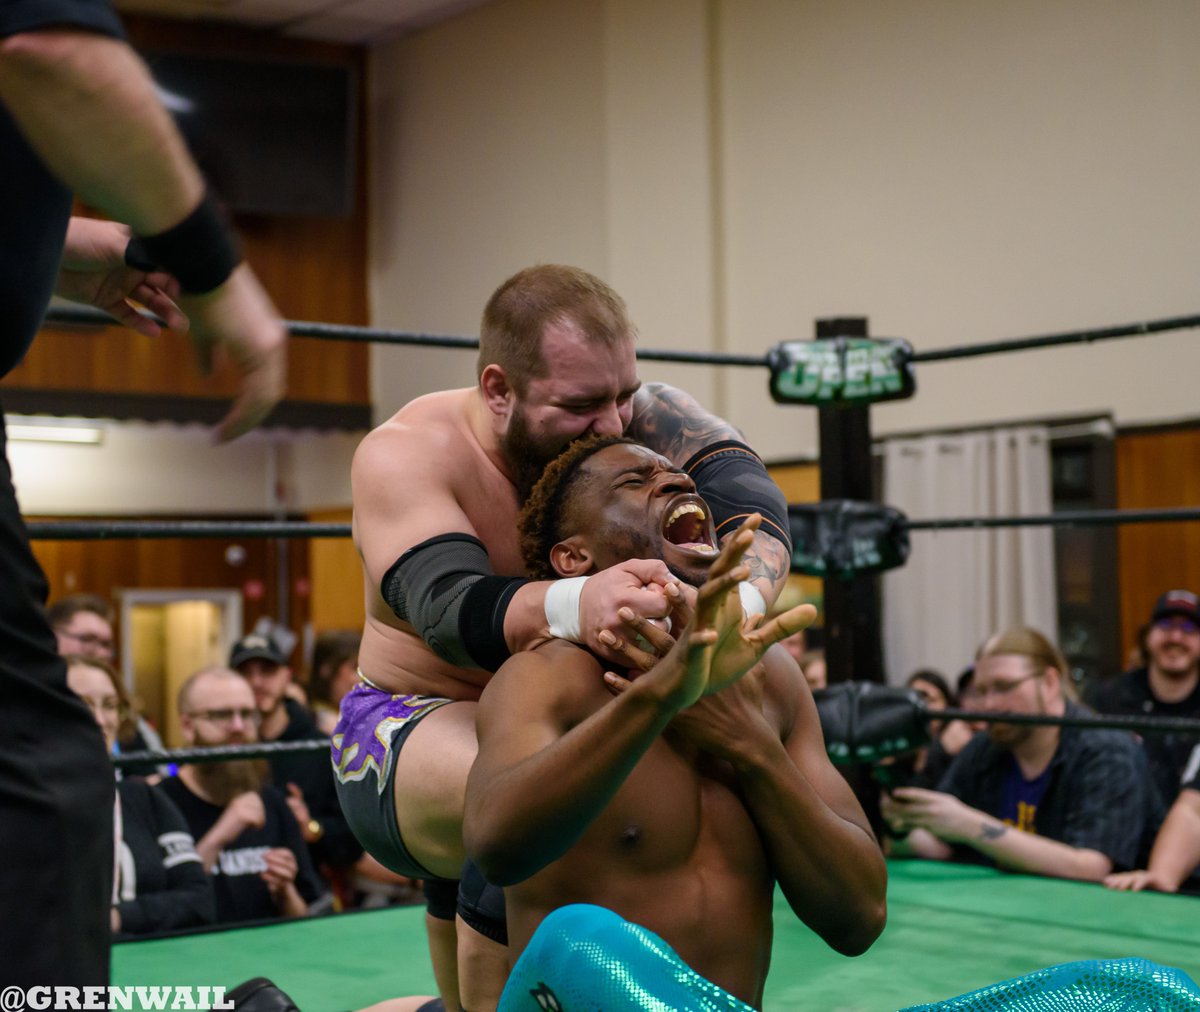 1/2 S03E15 @WrestlingOpen @beyondwrestling
@DannyMilesUSA vs @Kurothekidd